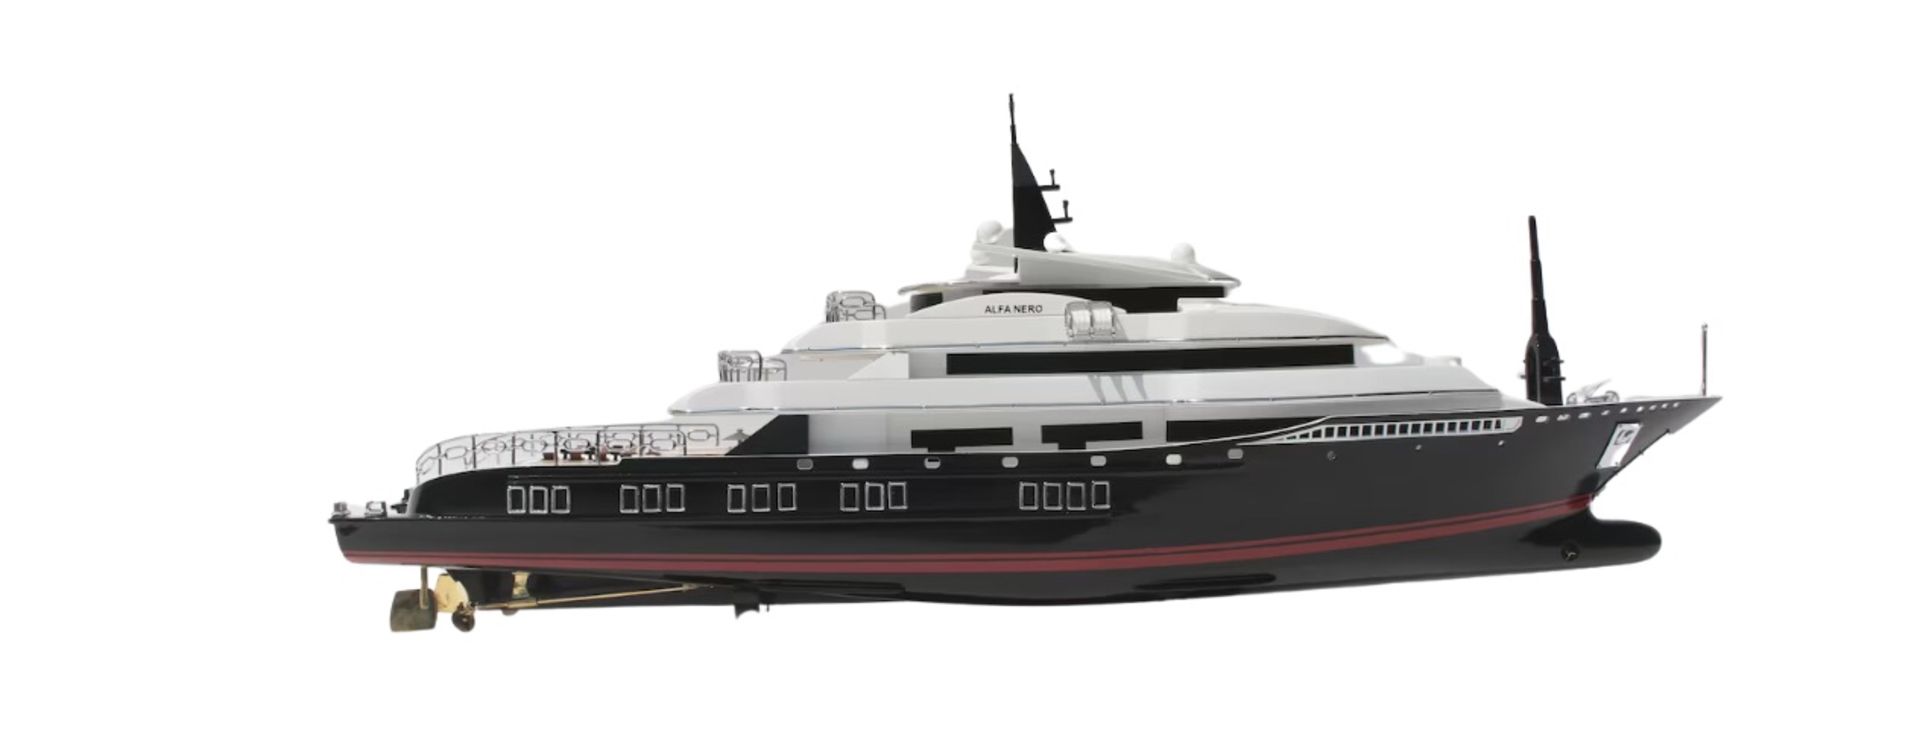 Alfa Nero Wooden Scale Yacht Display Model - Image 7 of 10